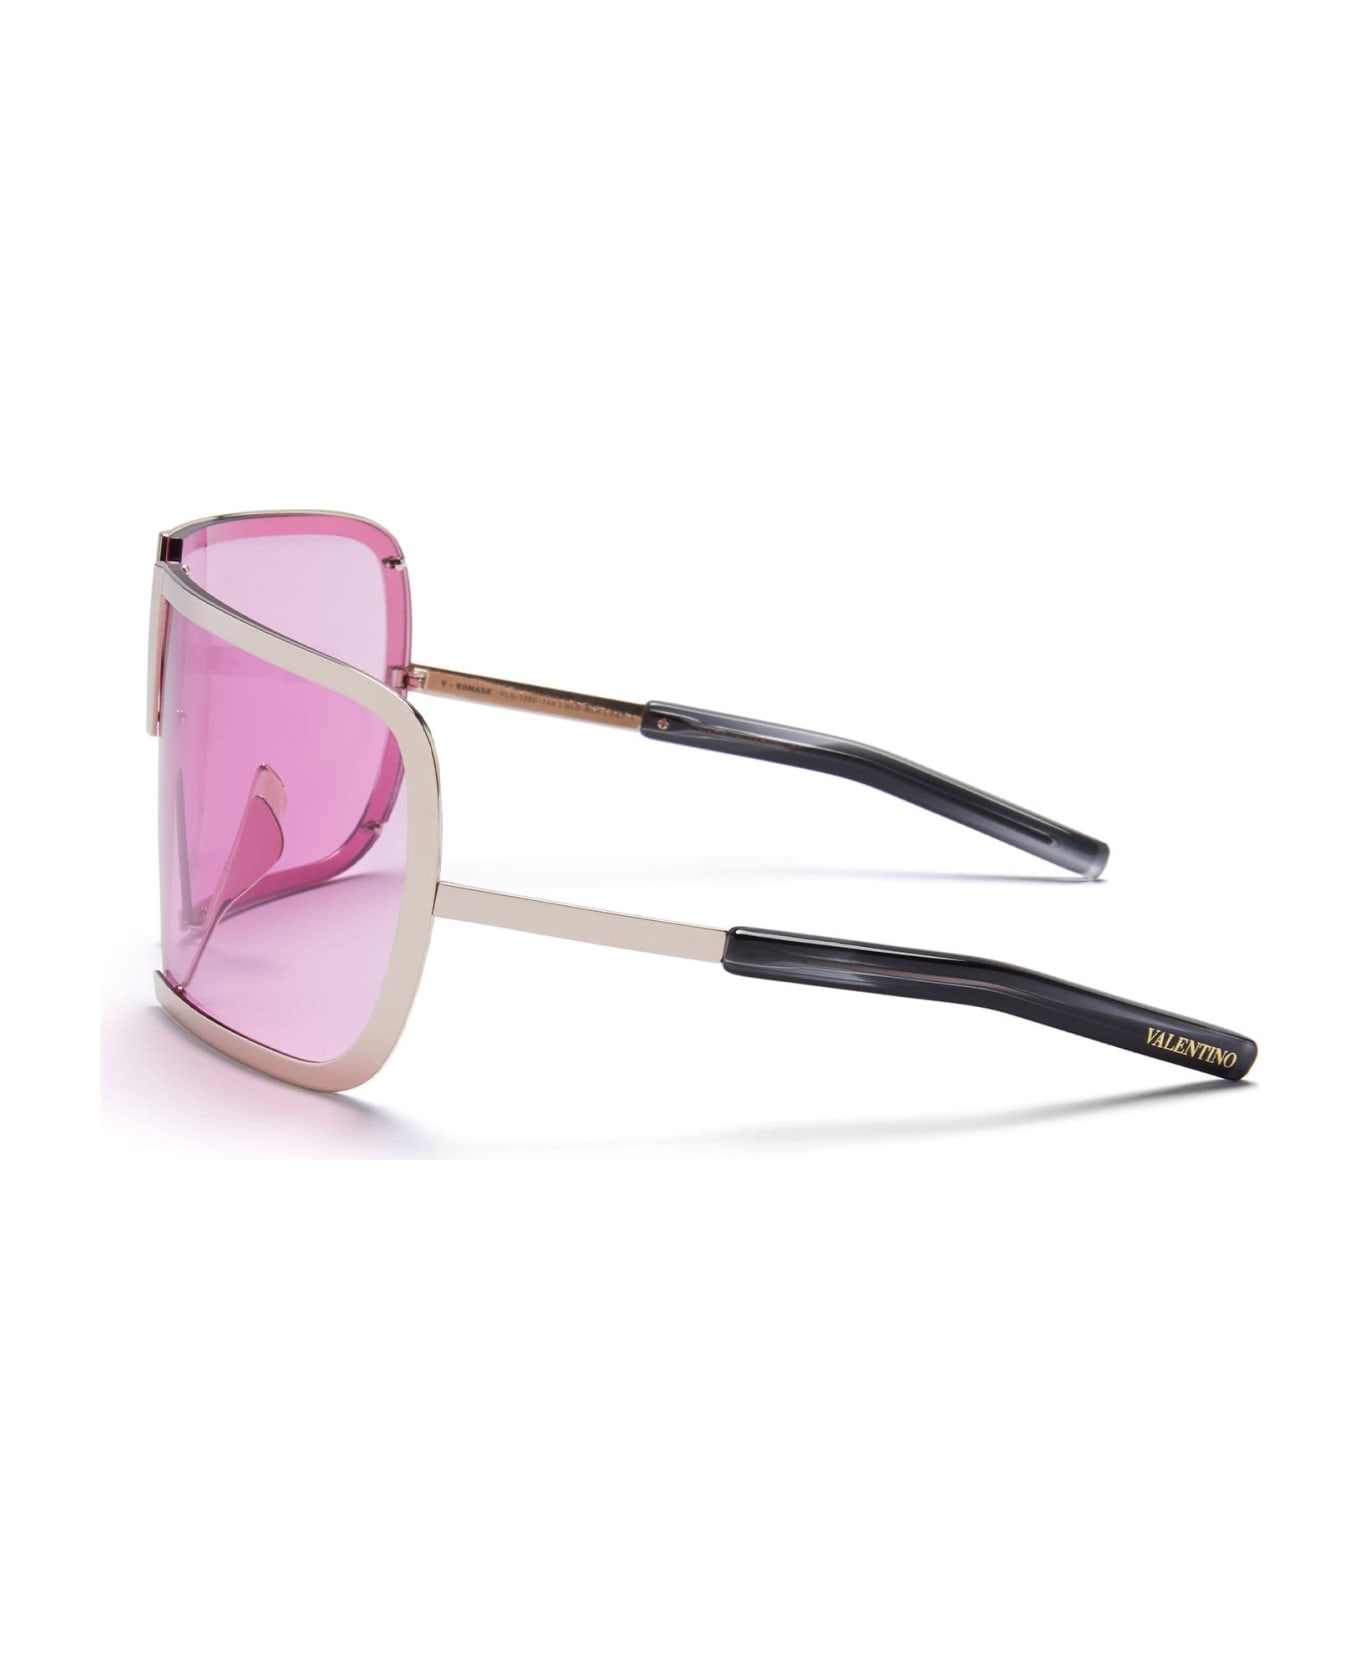 Valentino Eyewear Romask - Romask - White Gold / Crystal Black Sunglasses - Gold